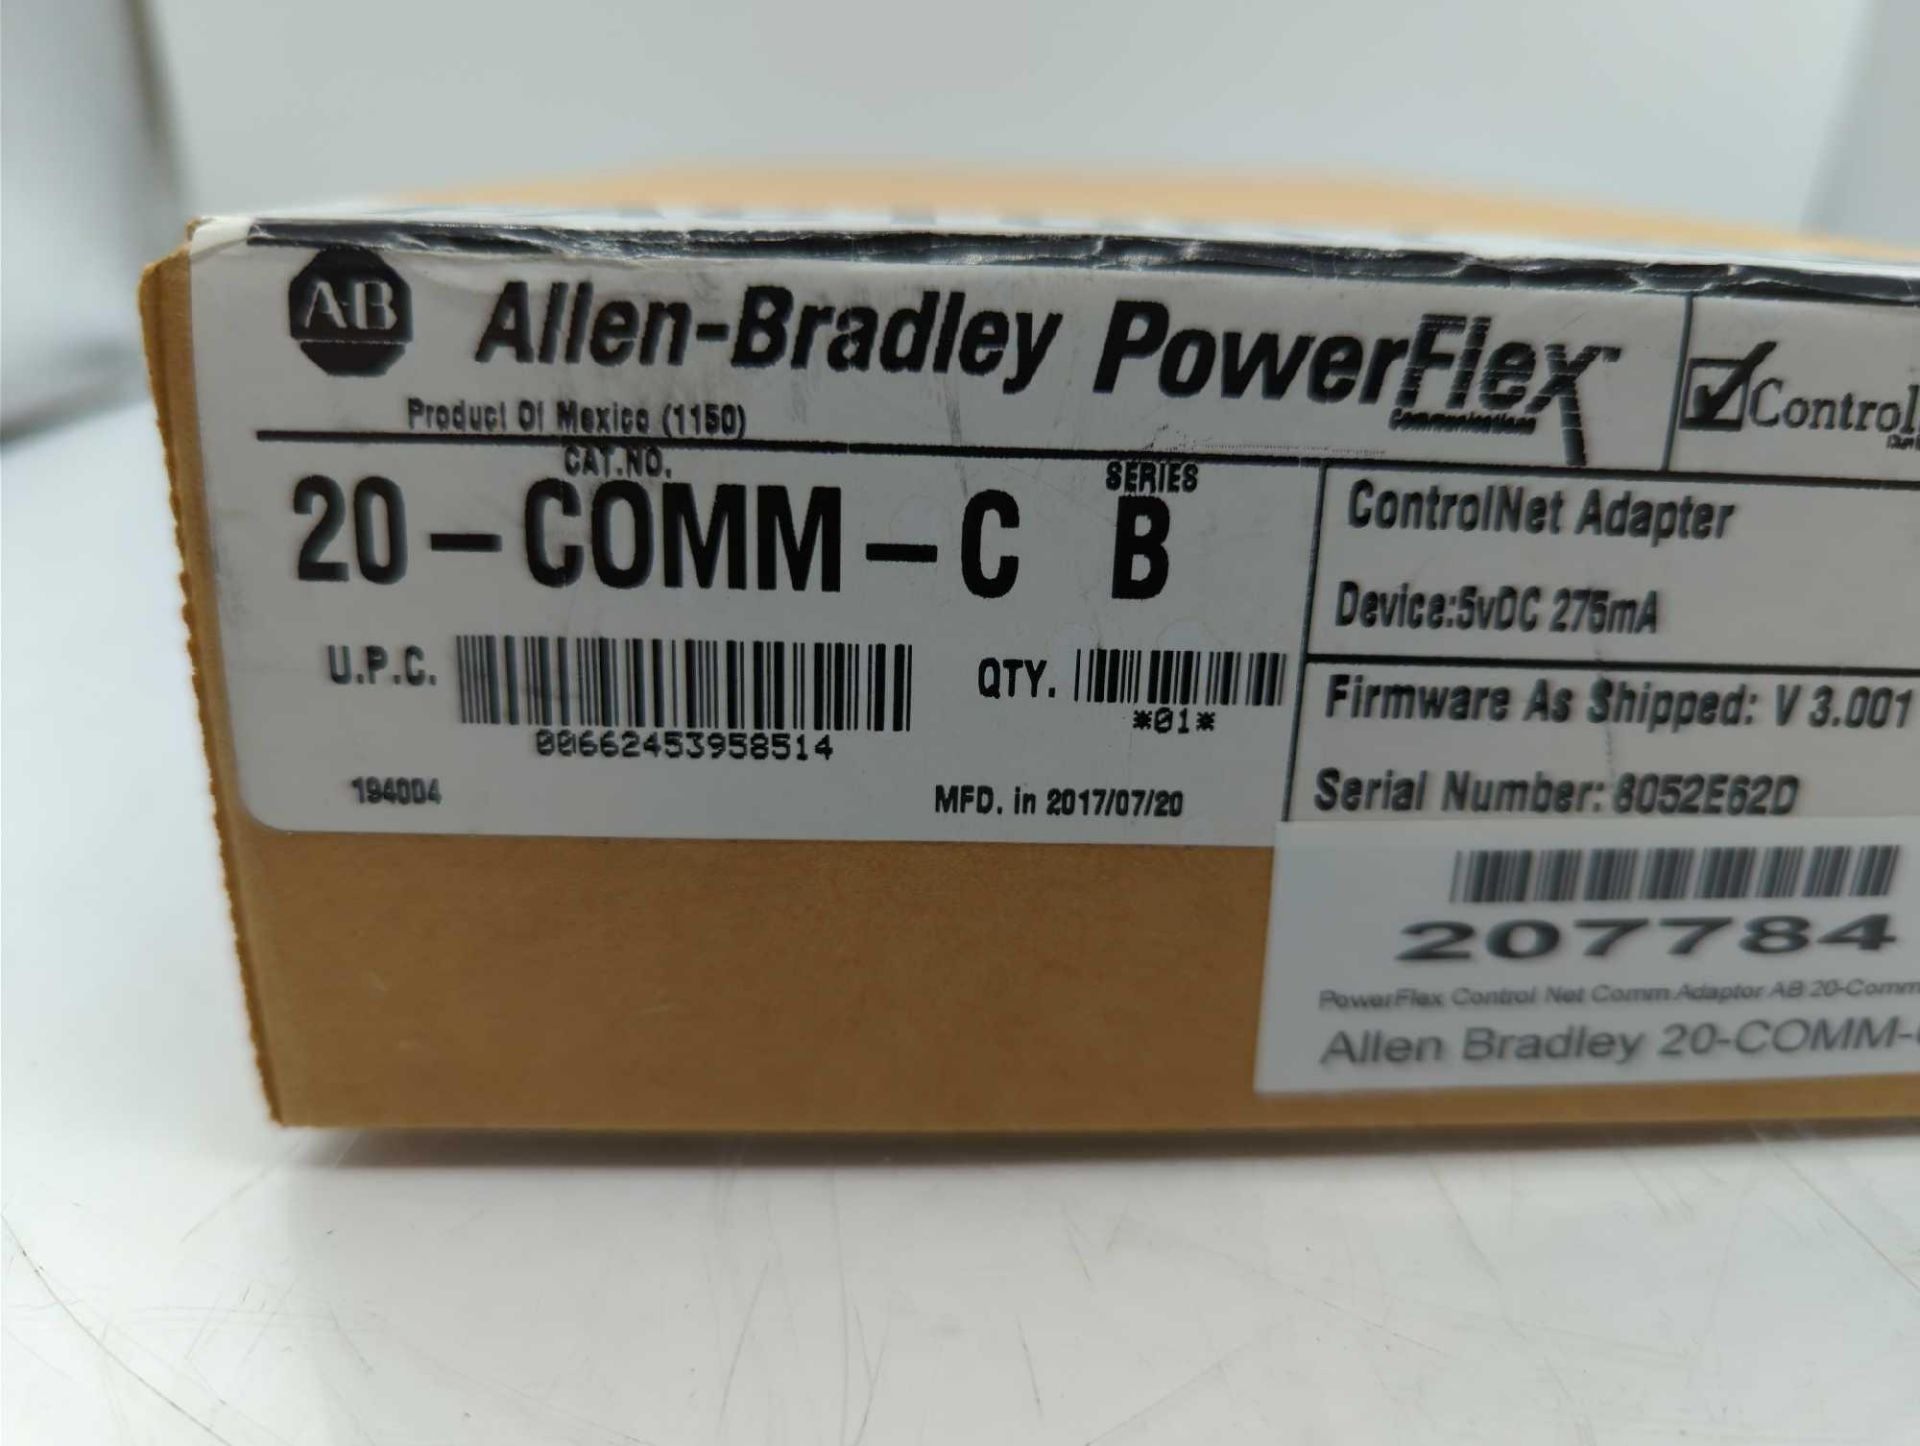 Factory Sealed Allen Bradley Powerflex Controlnet Adapter - Image 3 of 4